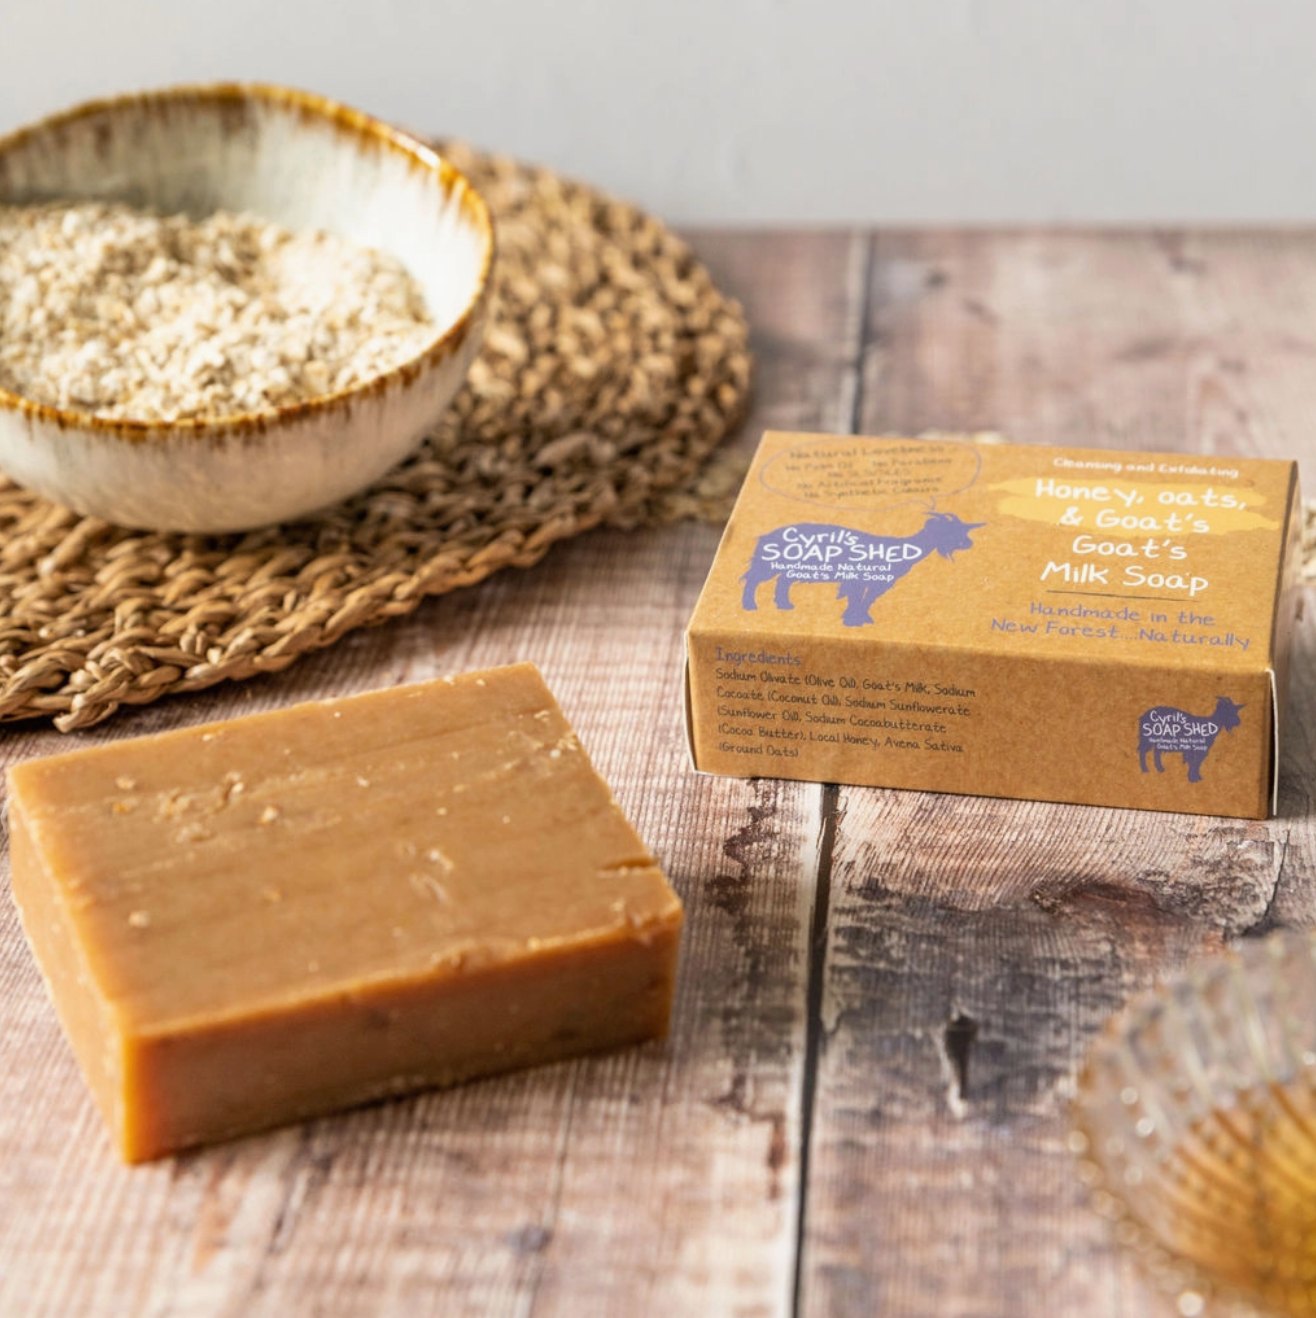 Cyril's Soap Shed Tea Honey, Oats and Goats Milk Soap | Handmade soap